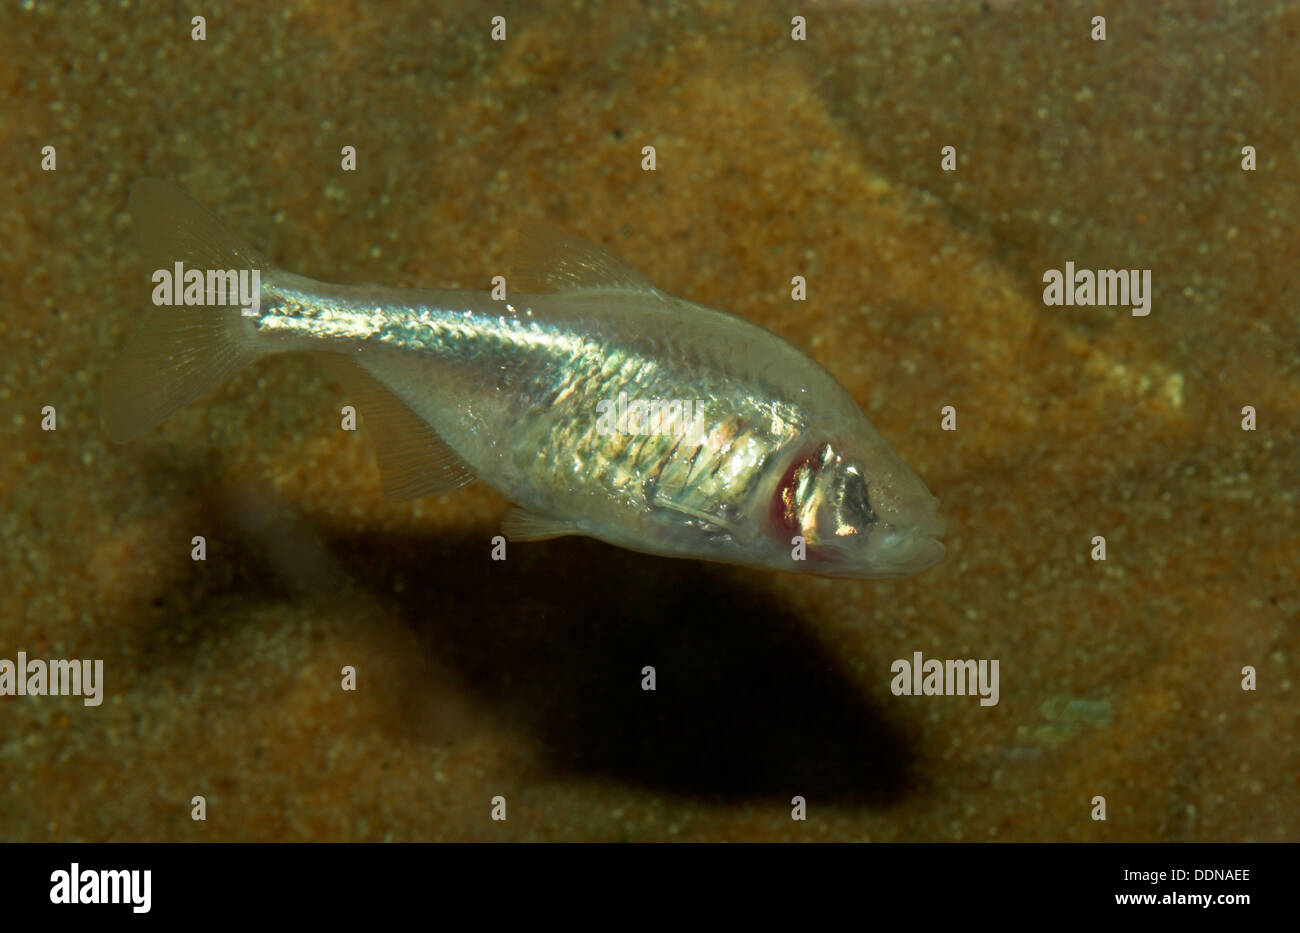 Blind cavefish, Blinder Höhlensalmler, Astyanax mexicanus, Astyanax fasciatus mexicanus, Anoptichthys jordani, Höhlenfisch Stock Photo